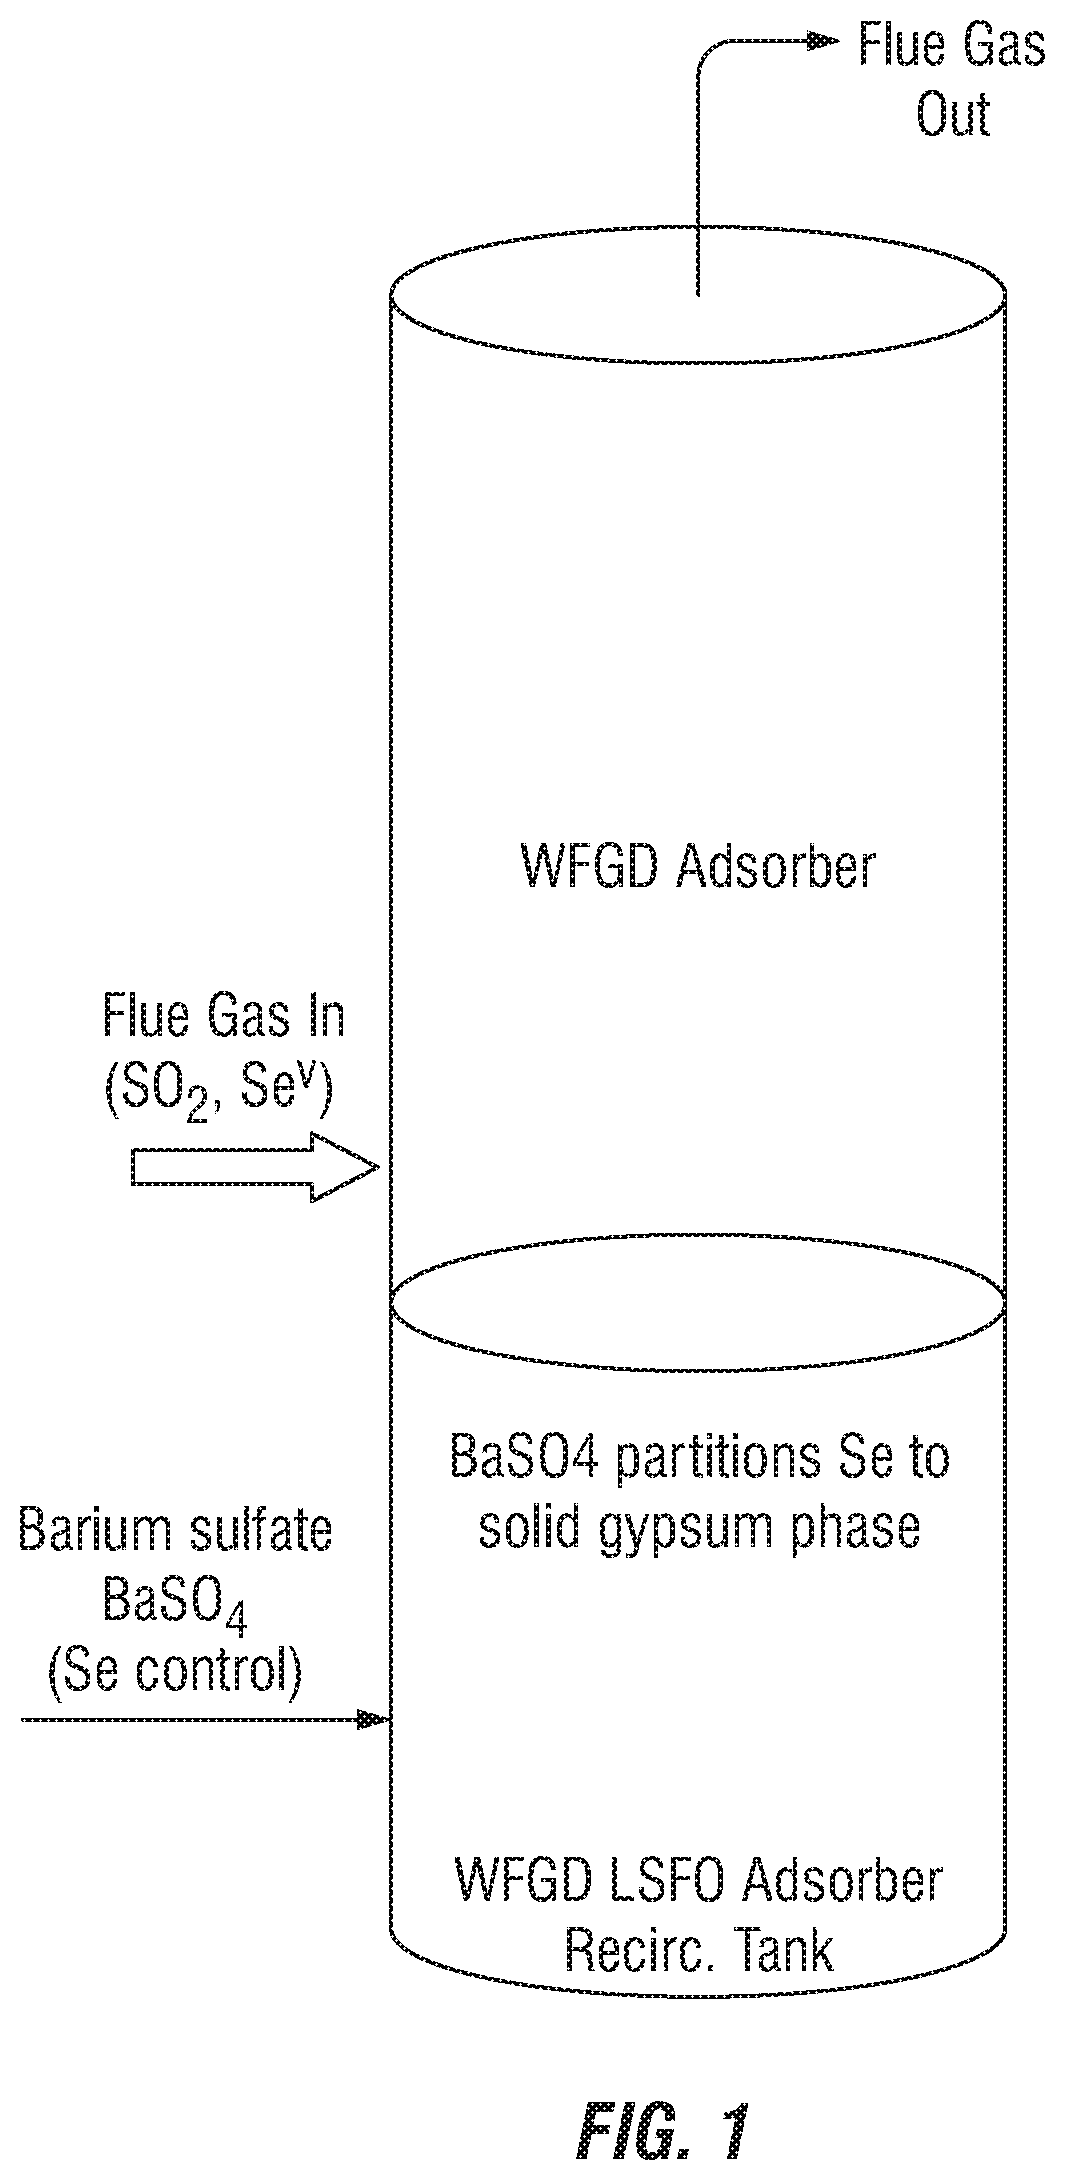 Control of aqueous arsenic, selenium, mercury or other metals from flue gas